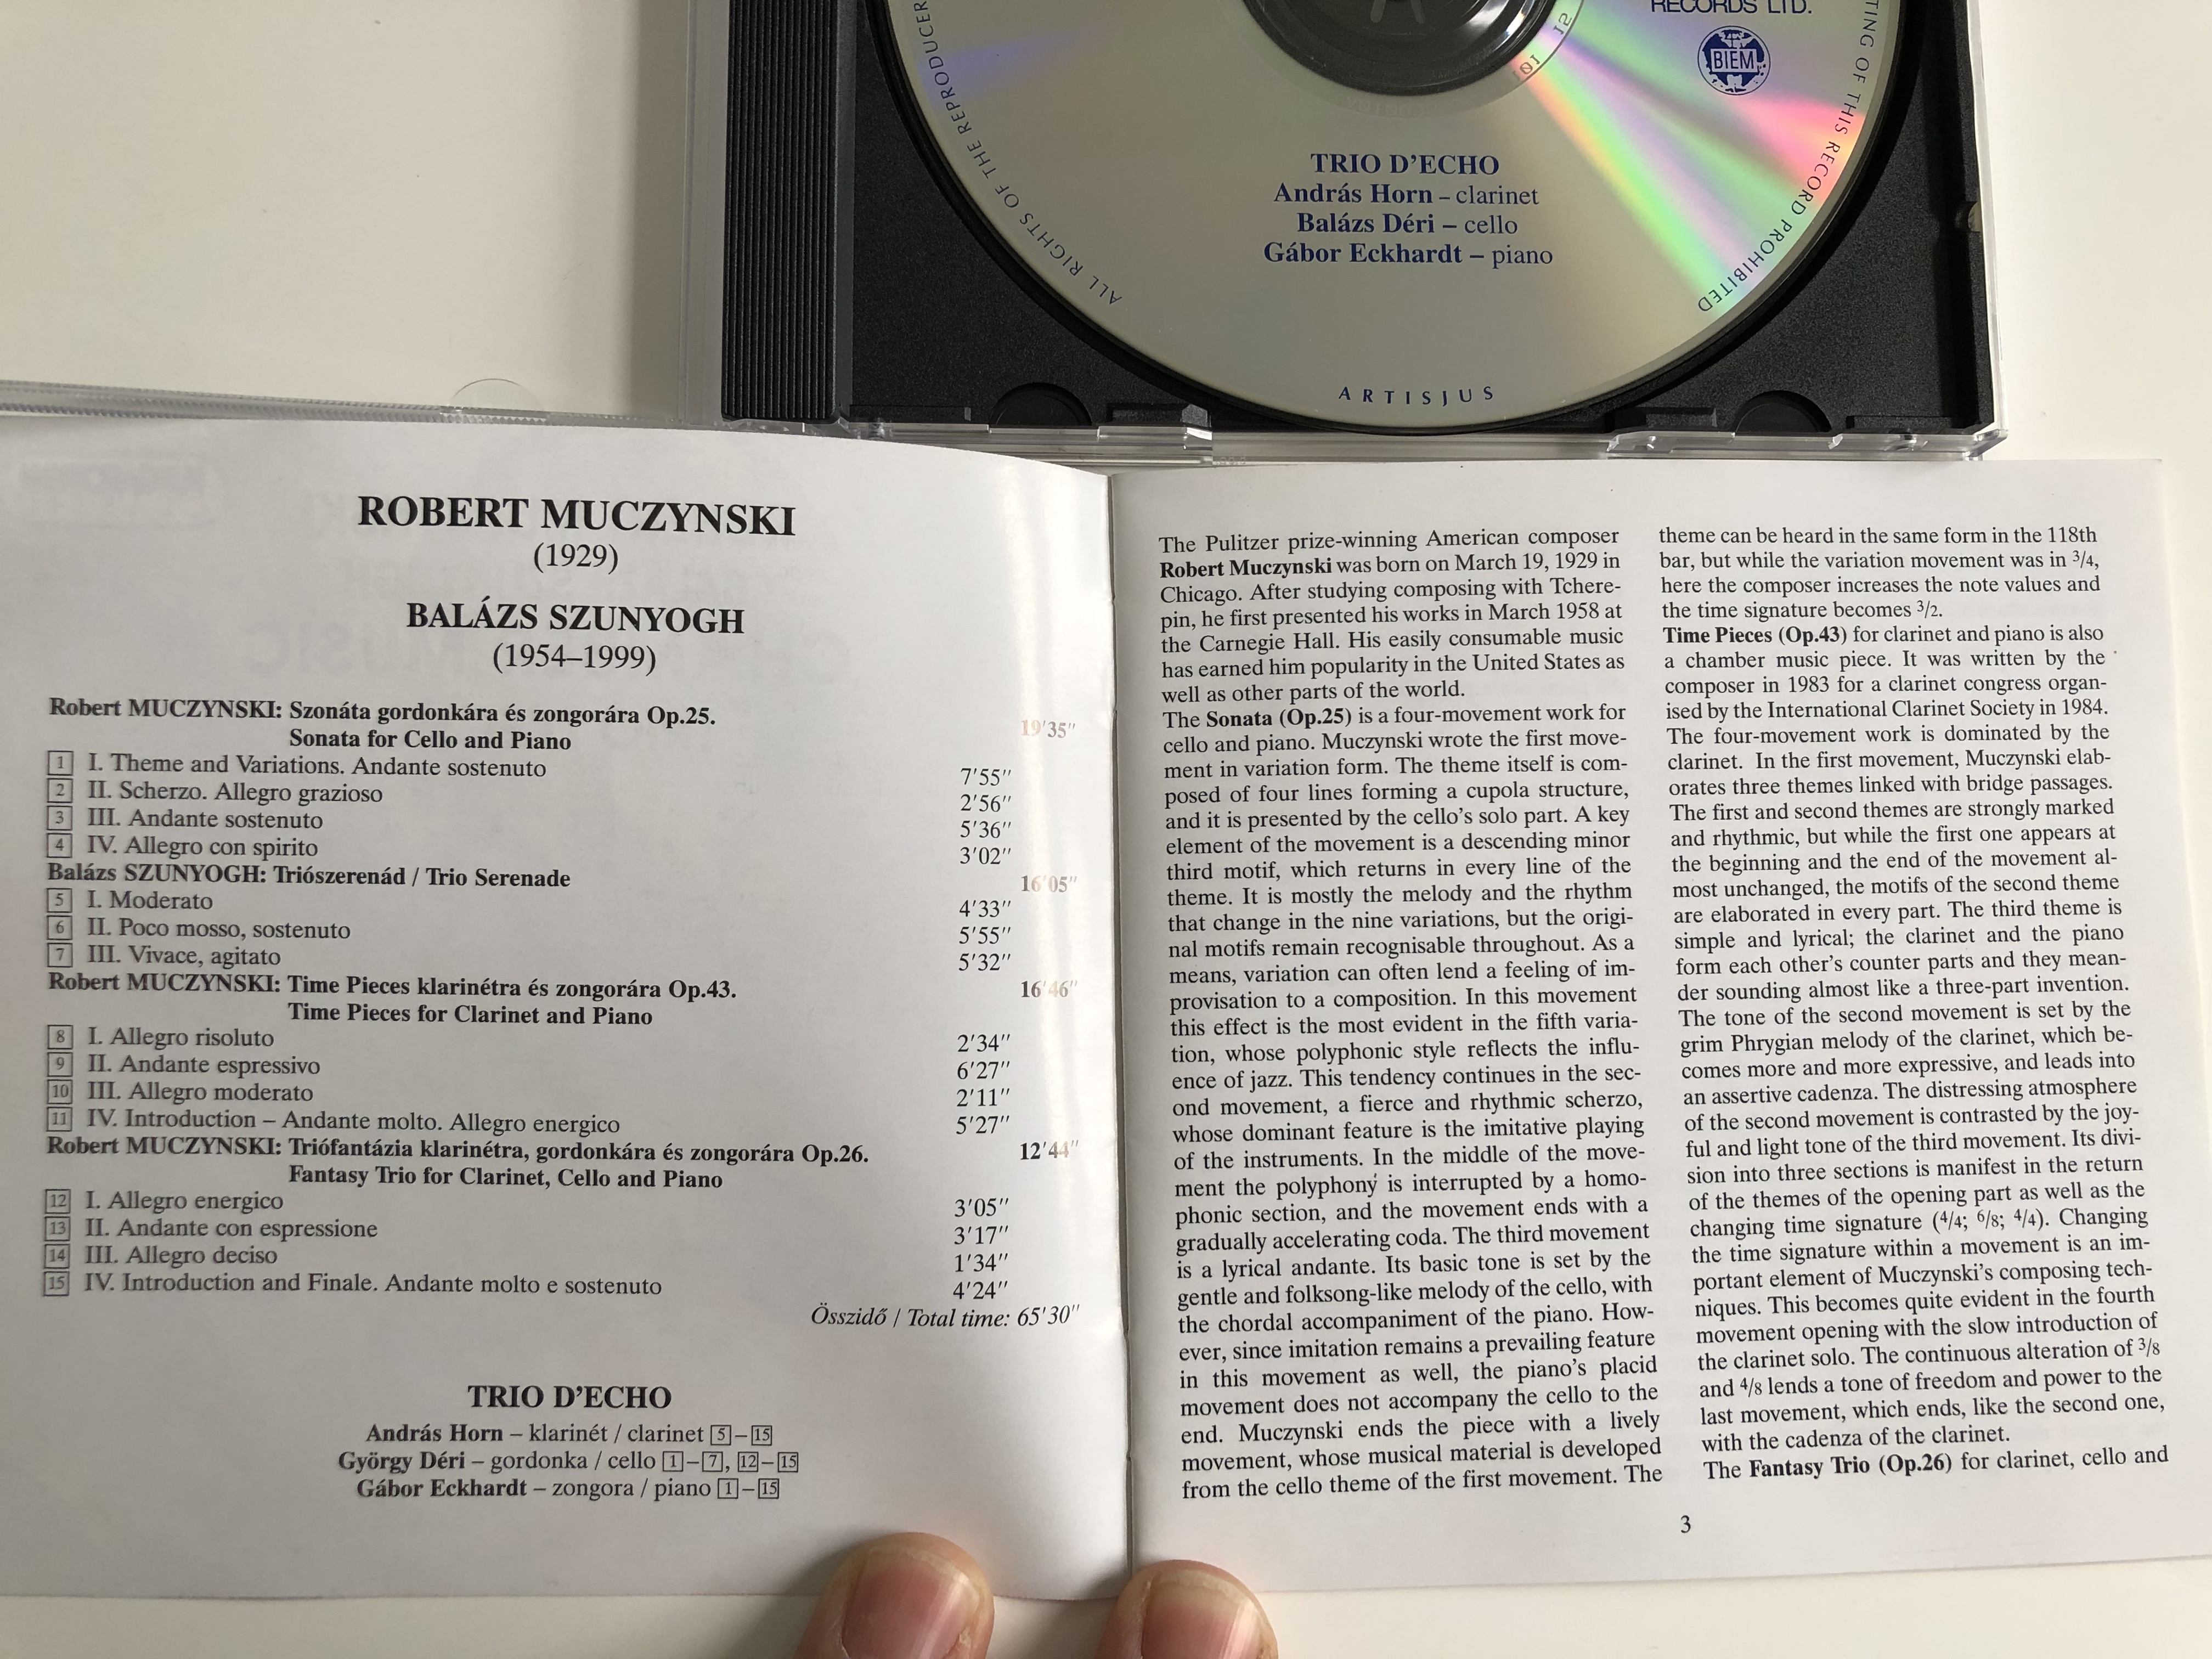 robert-muczynski-balazs-szunyogh-chamber-music-trio-d-echo-hungaroton-audio-cd-2000-stereo-hcd-31877-2-.jpg